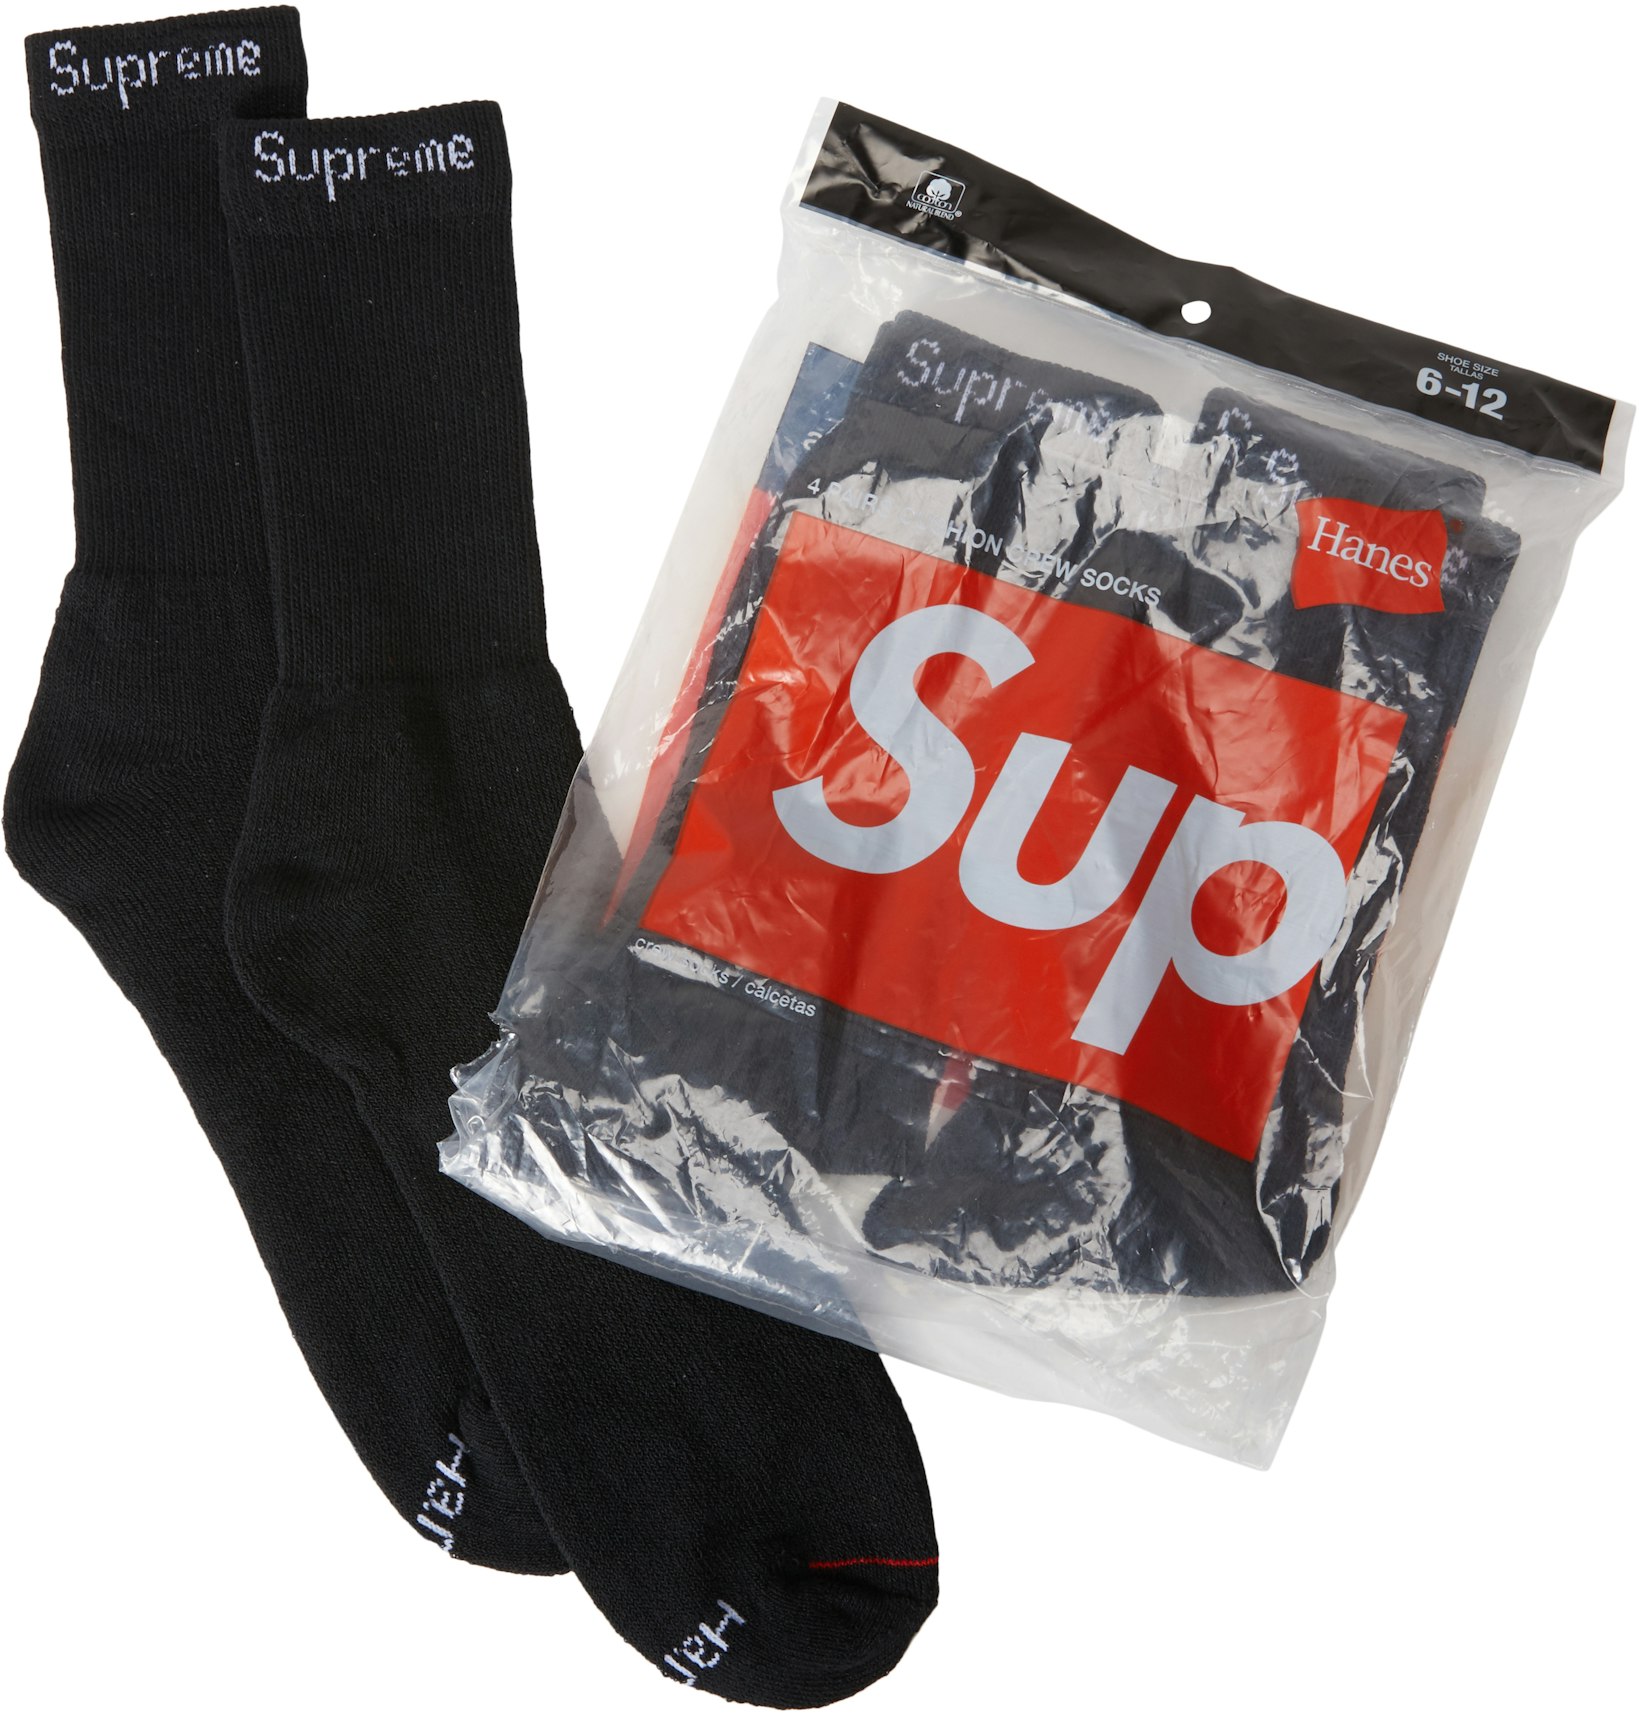 Hanes Socks Pack) Black SS18/Pre-SS18 - MX